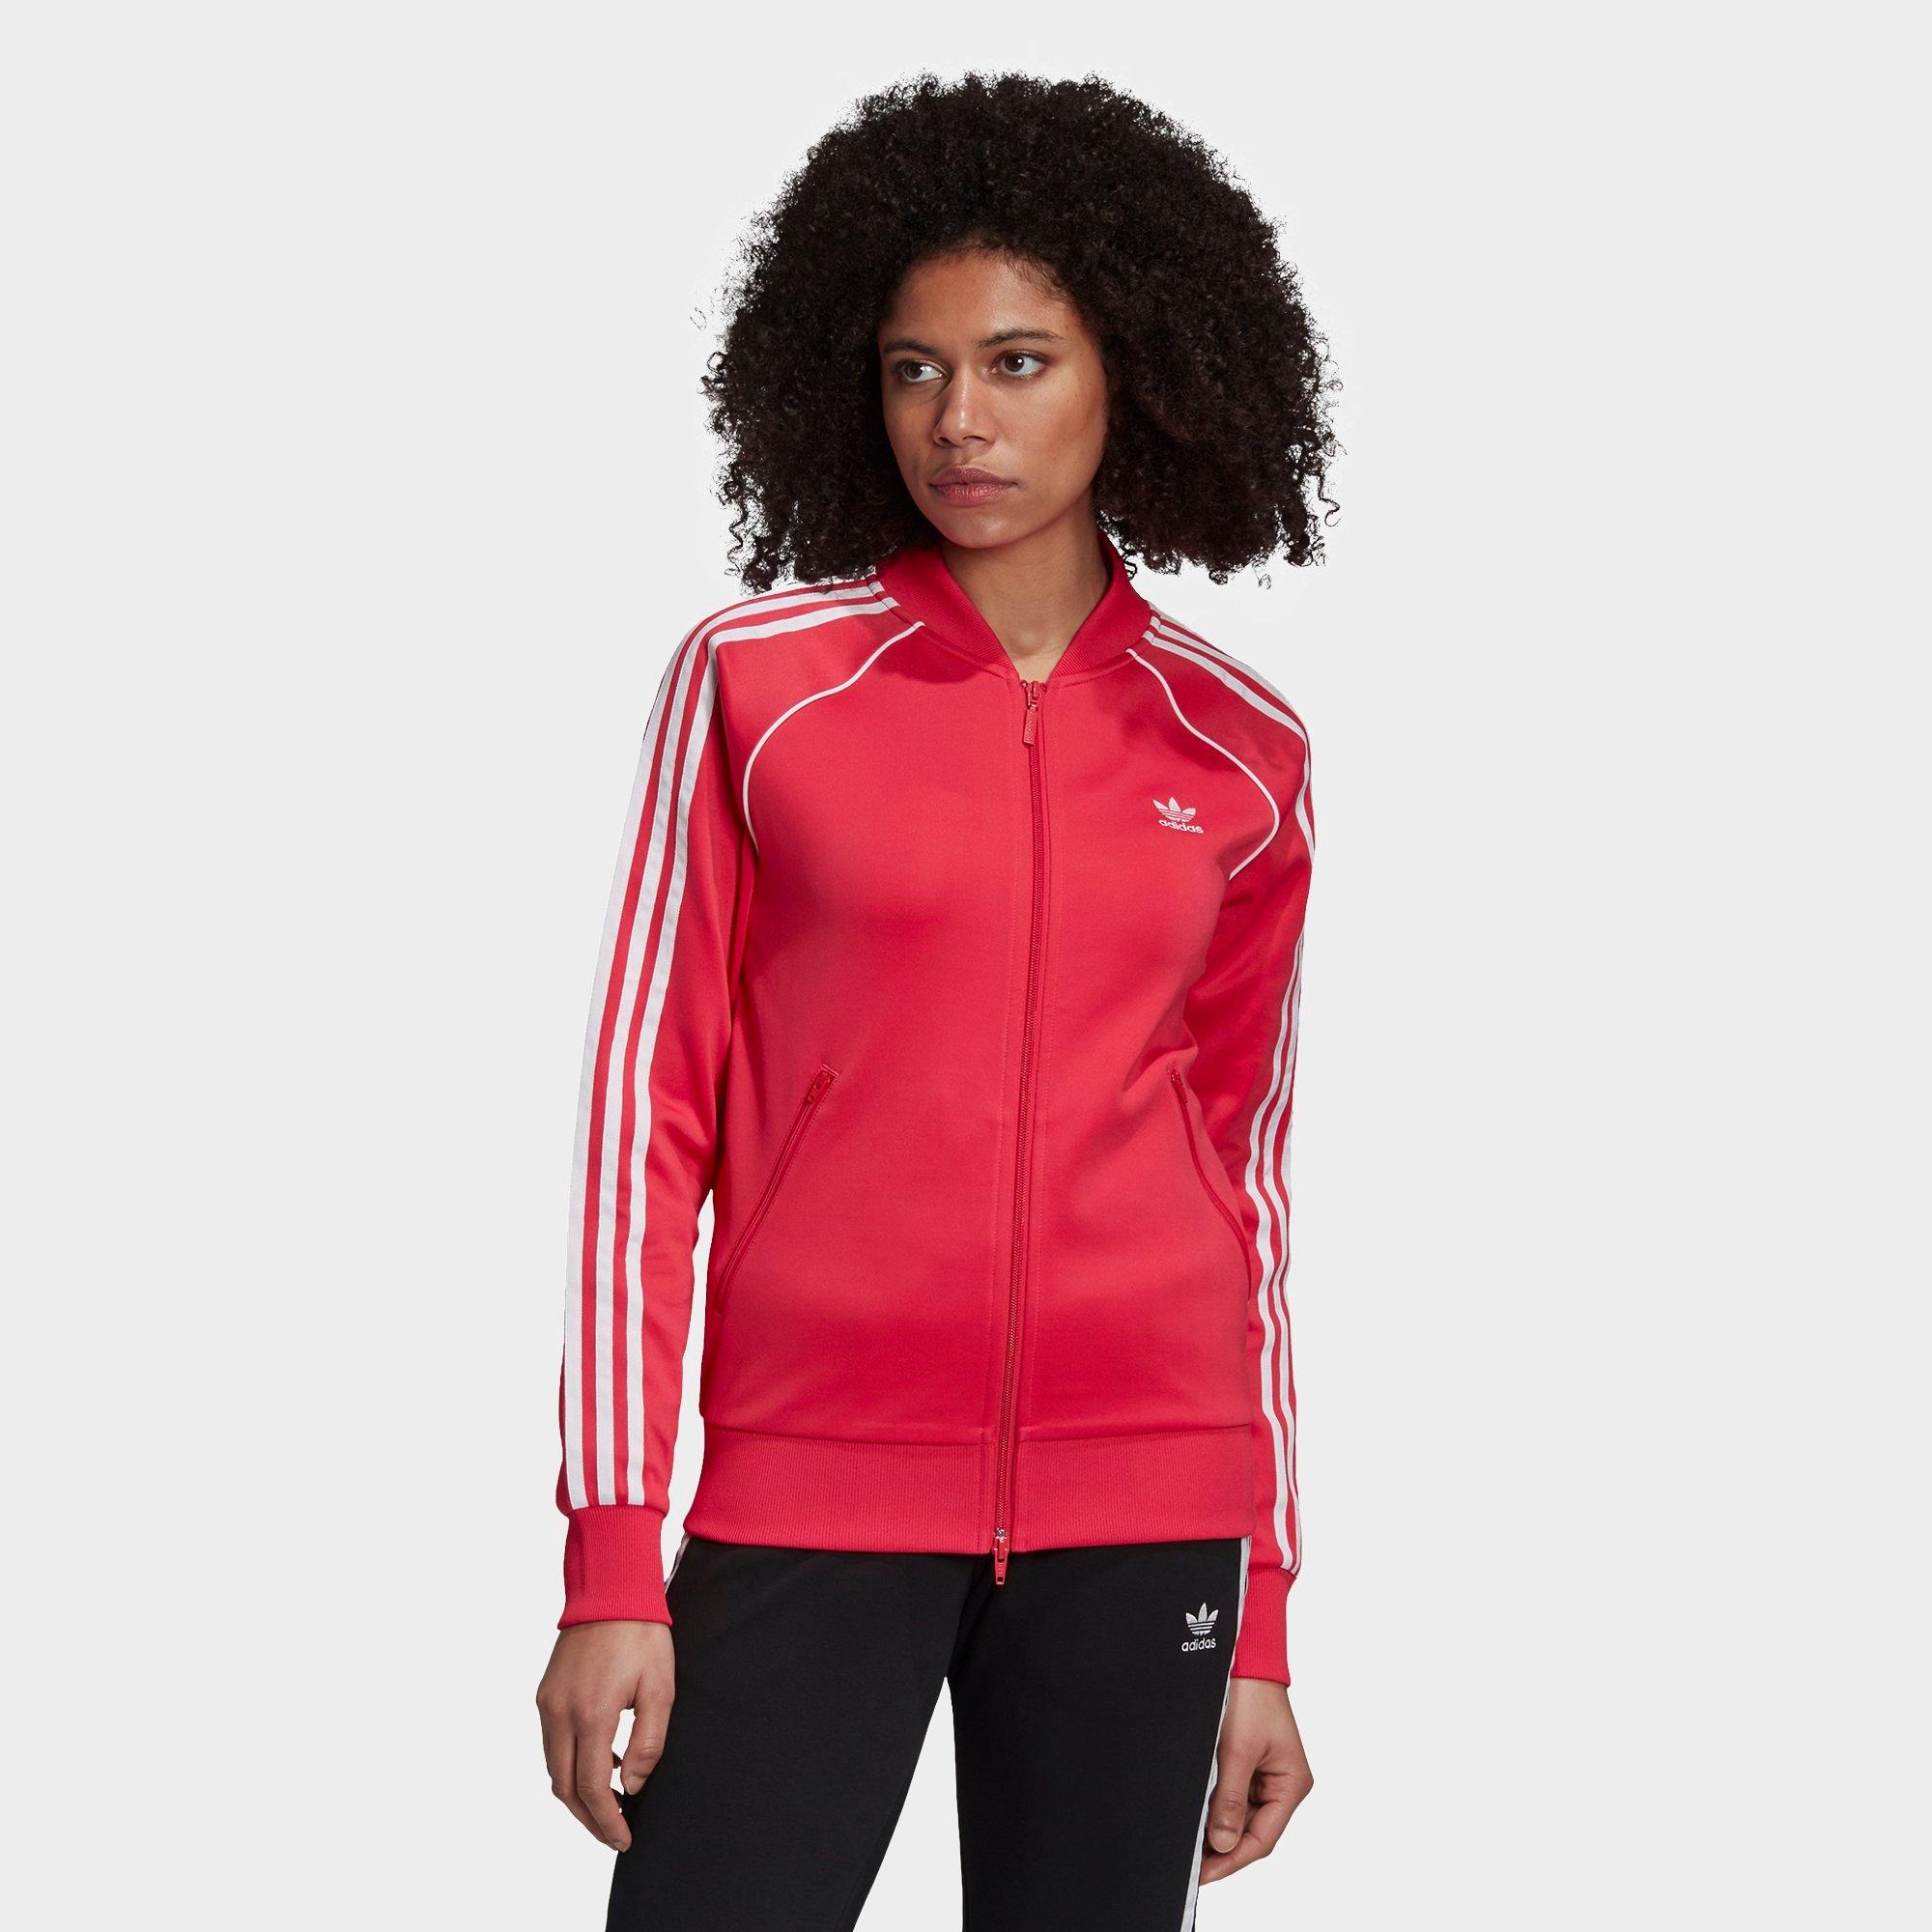 adidas women's basketball 3 stripe jacket